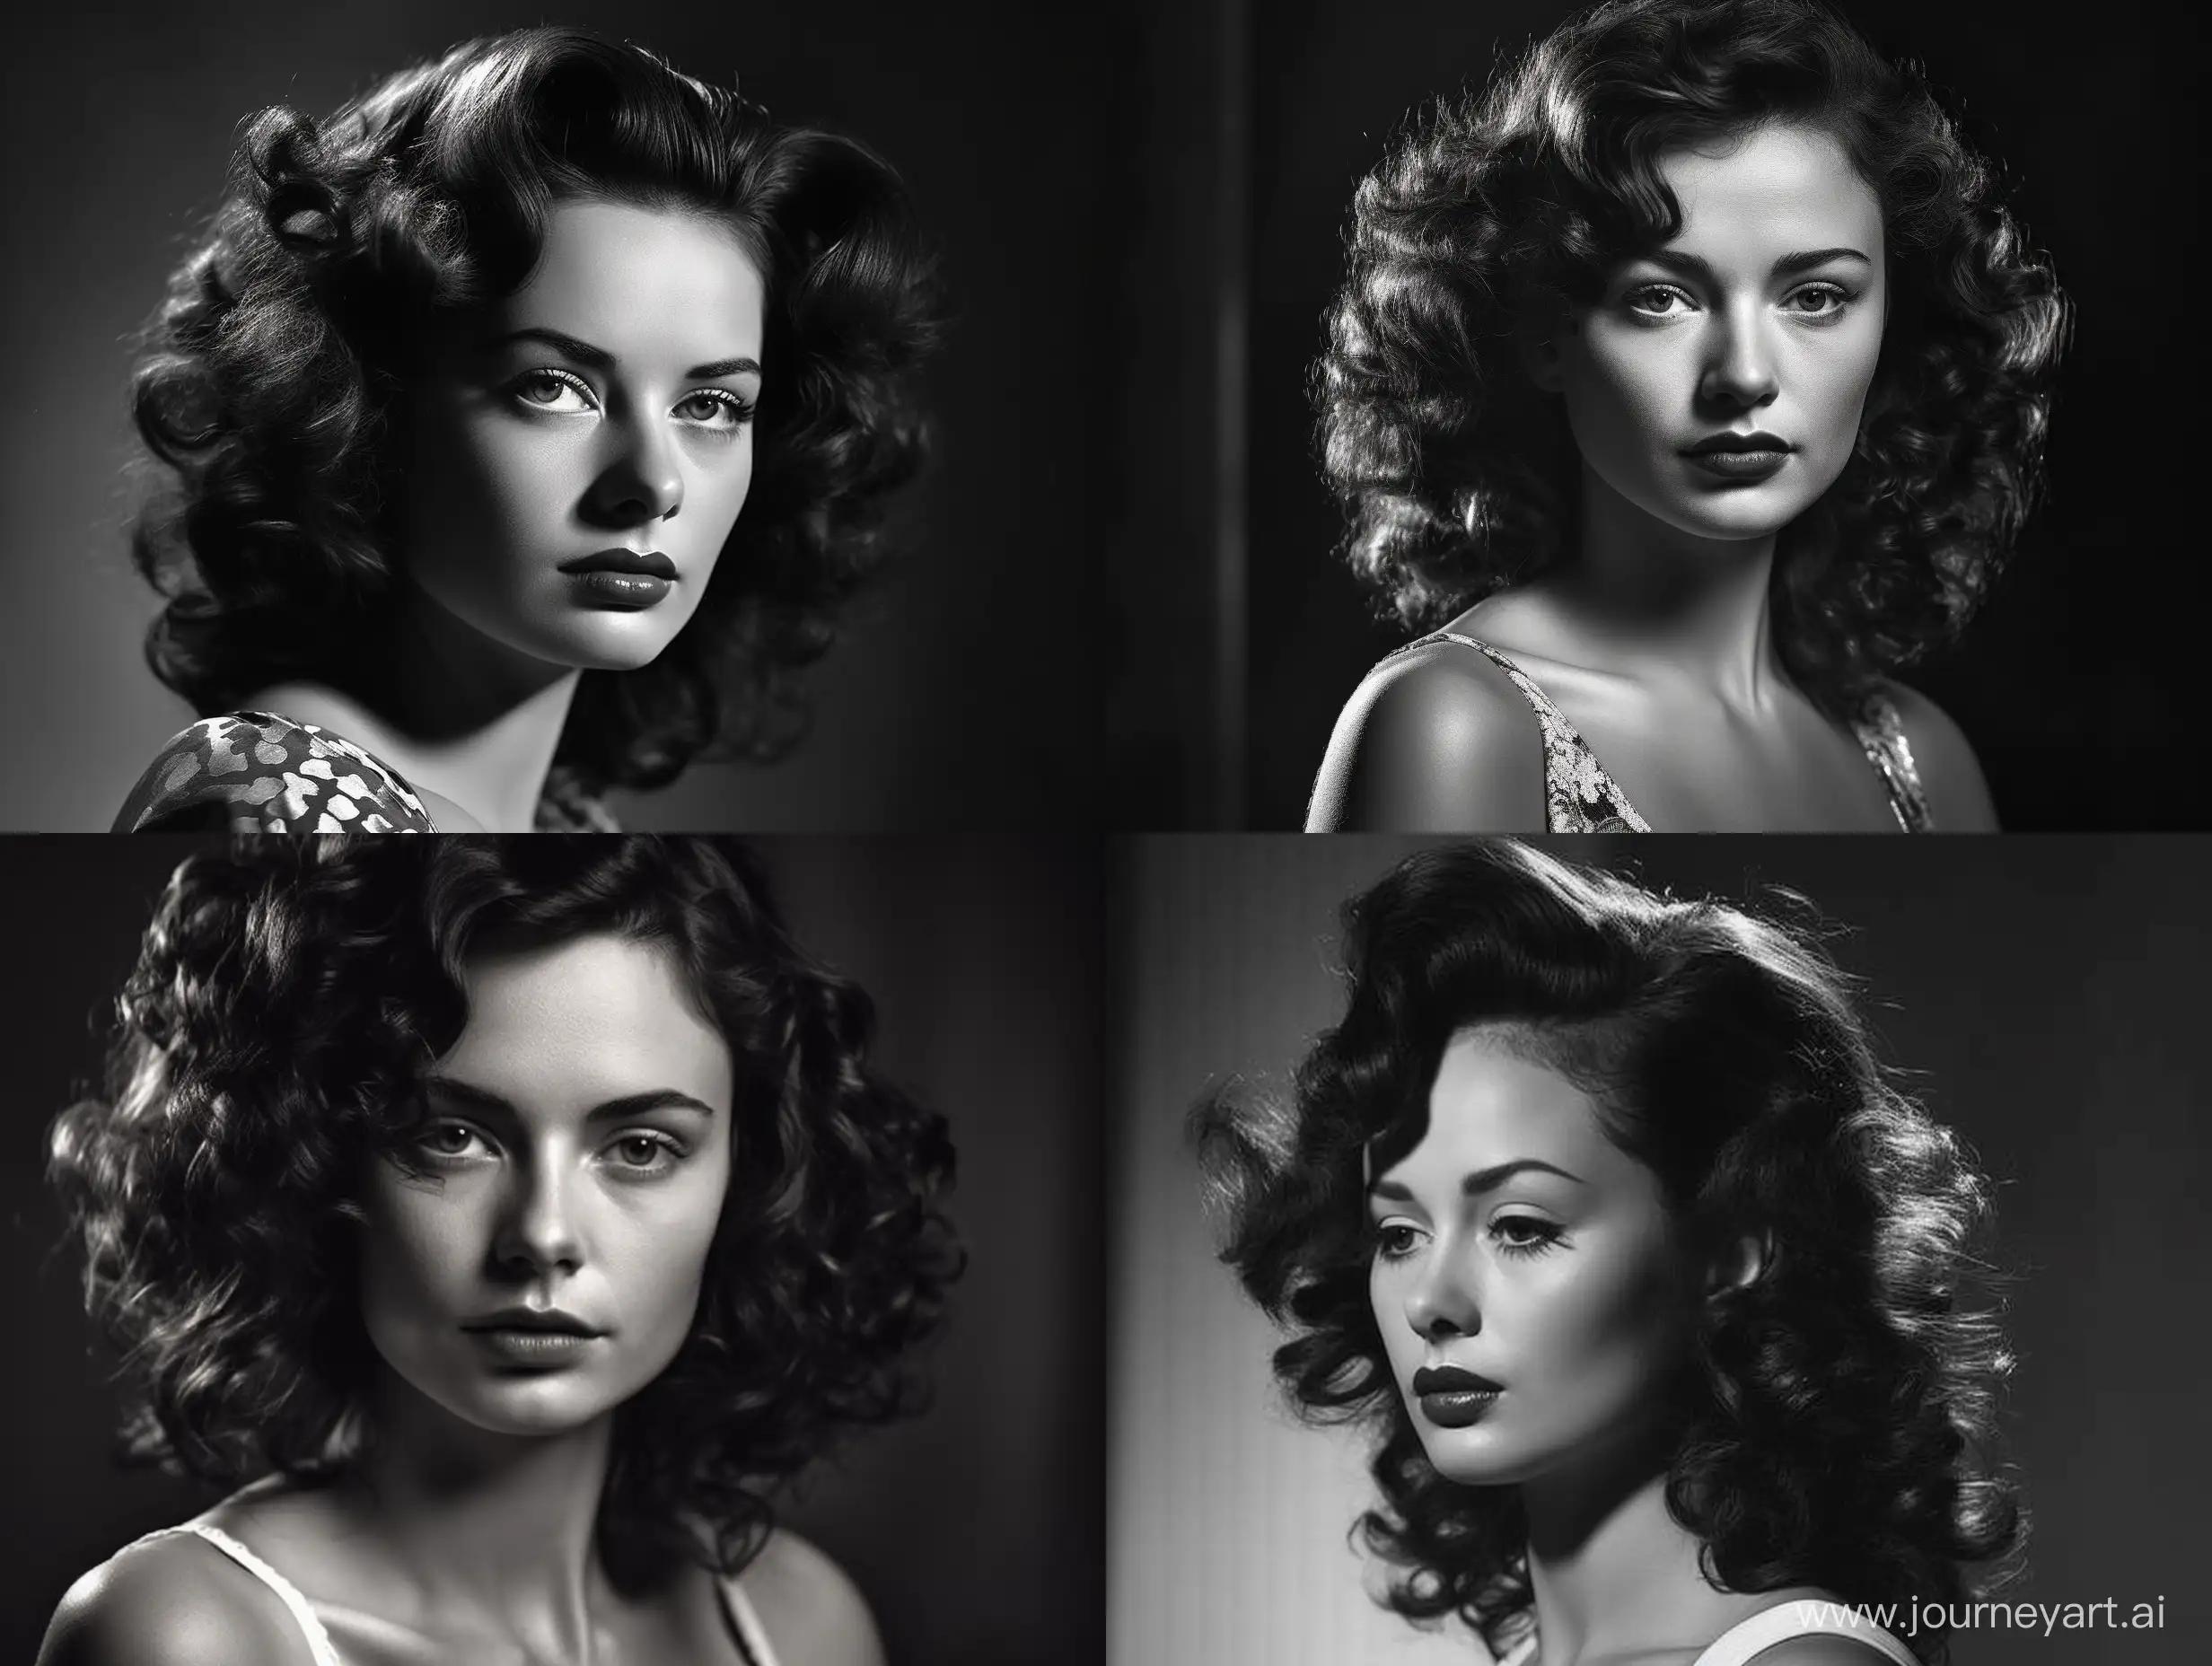 Captivating-1950s-Woman-Nostalgic-Hollywood-Glamour-in-Monochrome